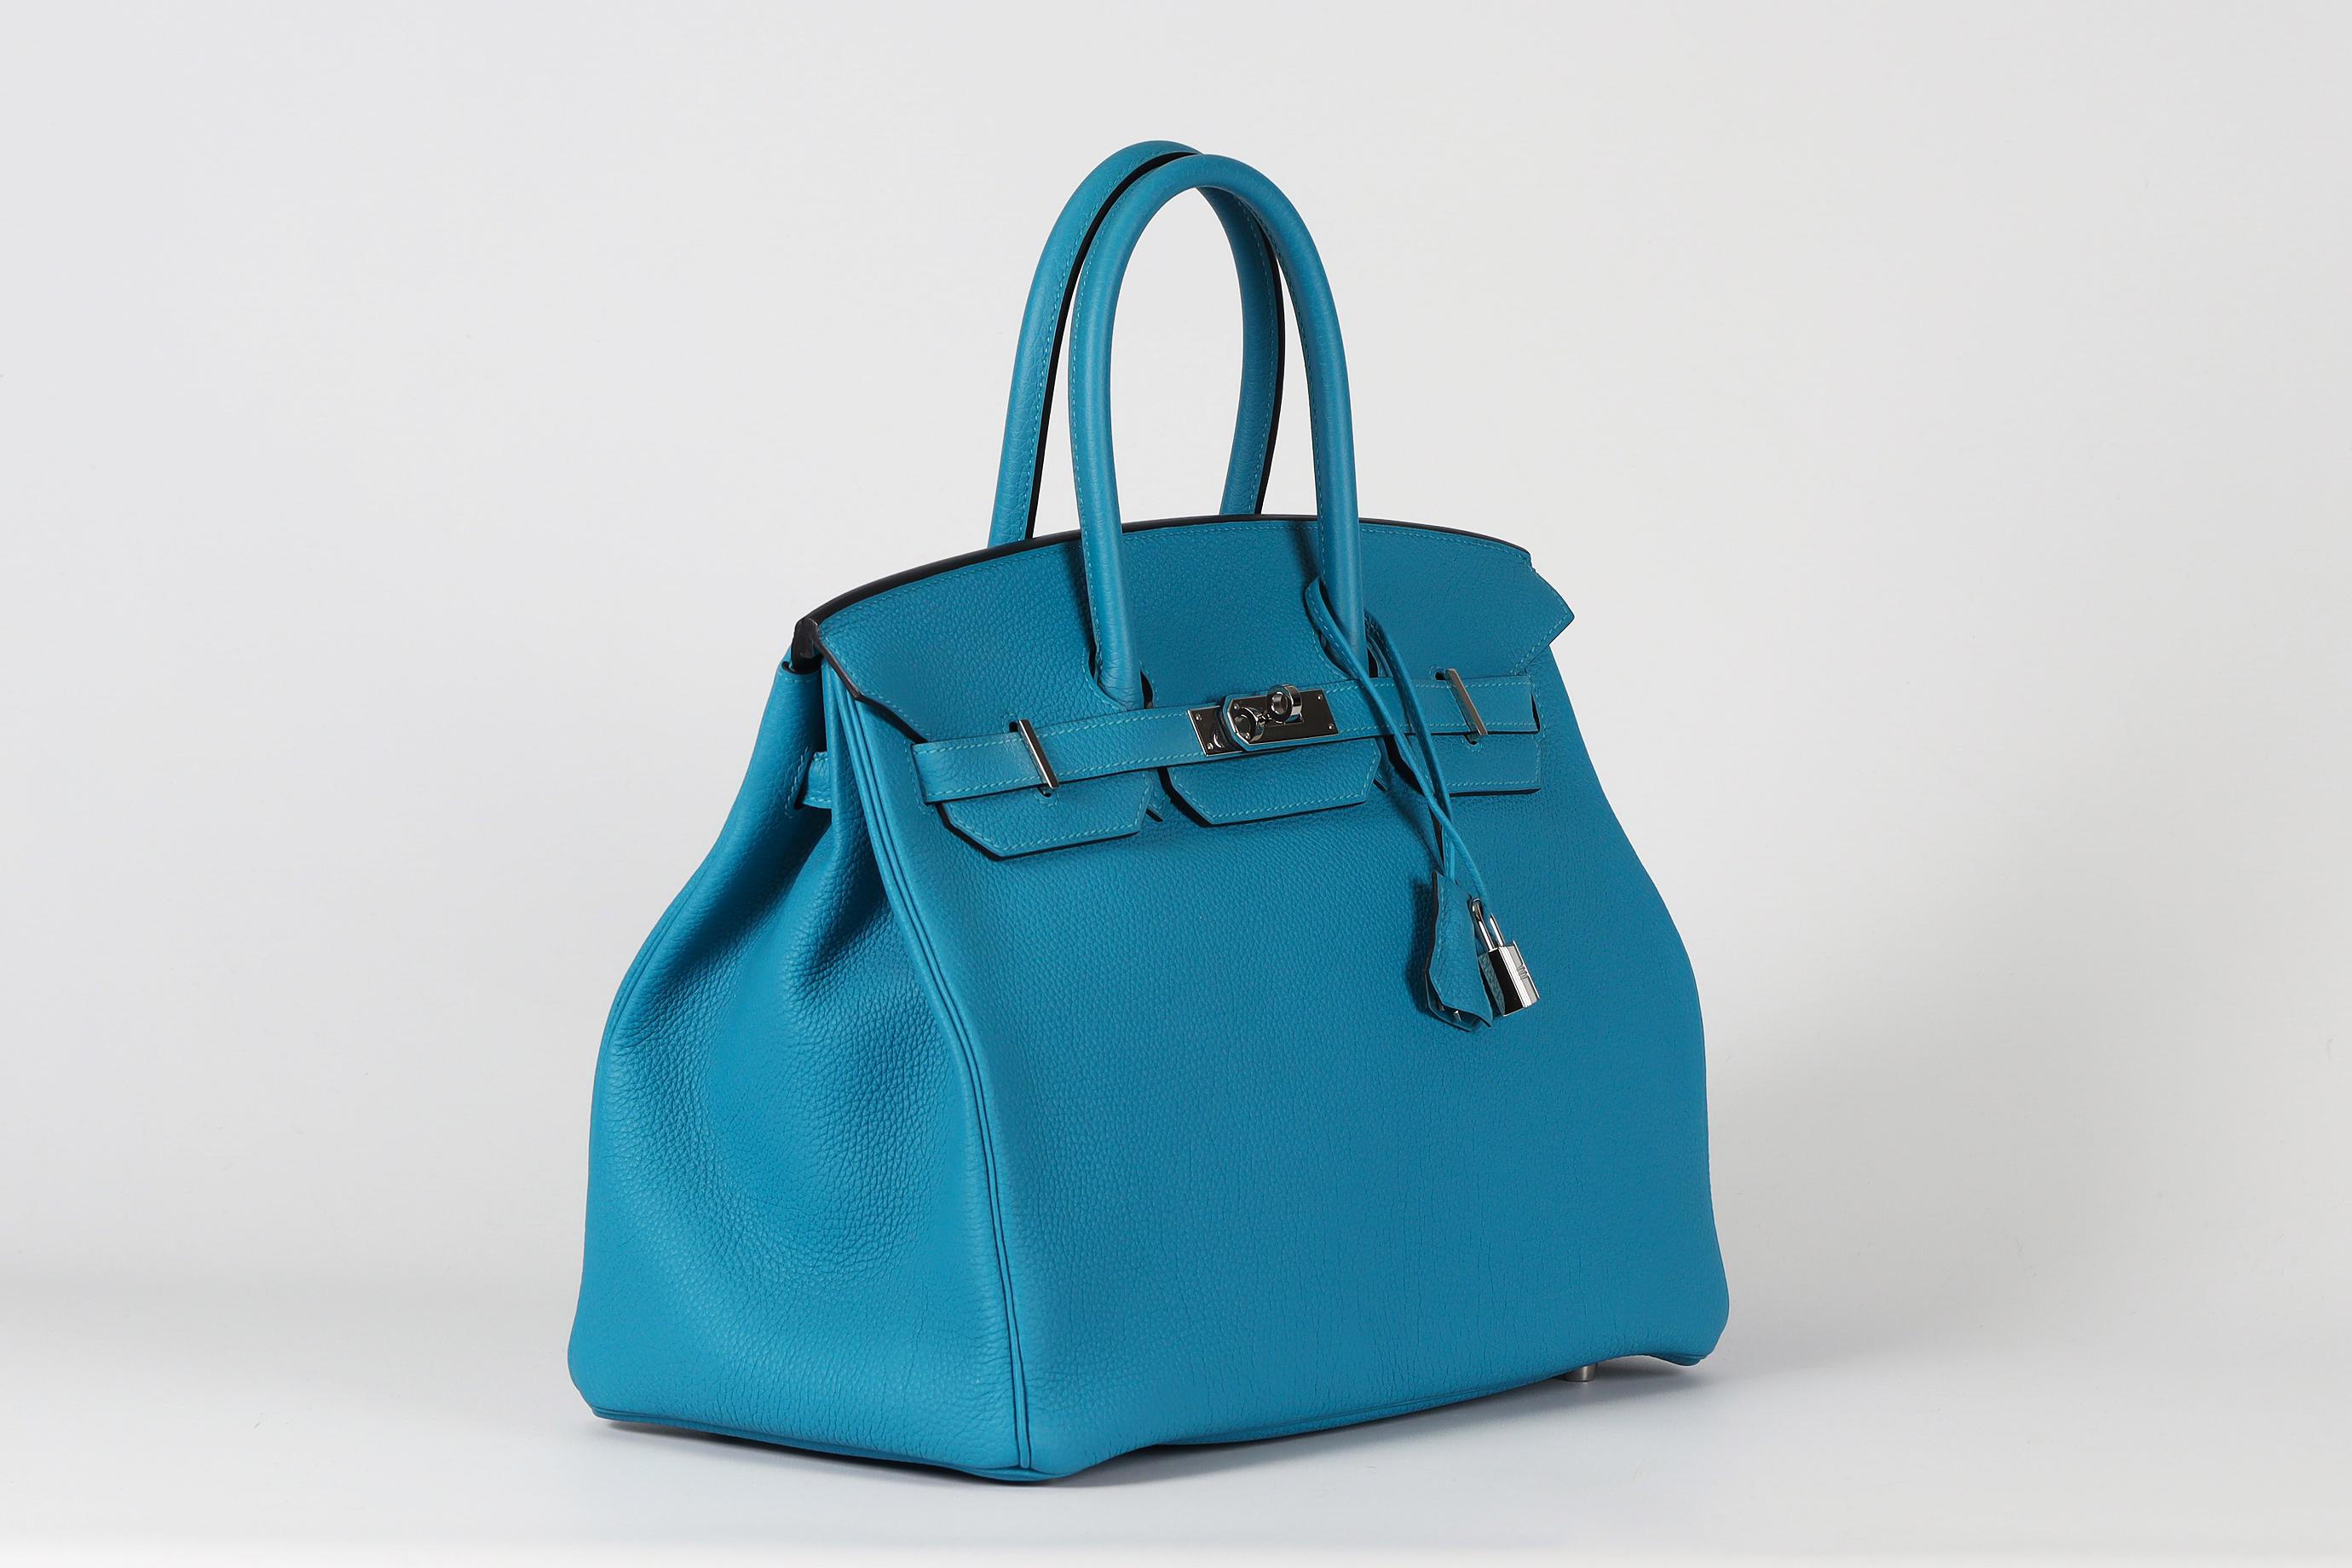 Hermès 2014 Birkin 35cm Togo Leather Bag For Sale 3